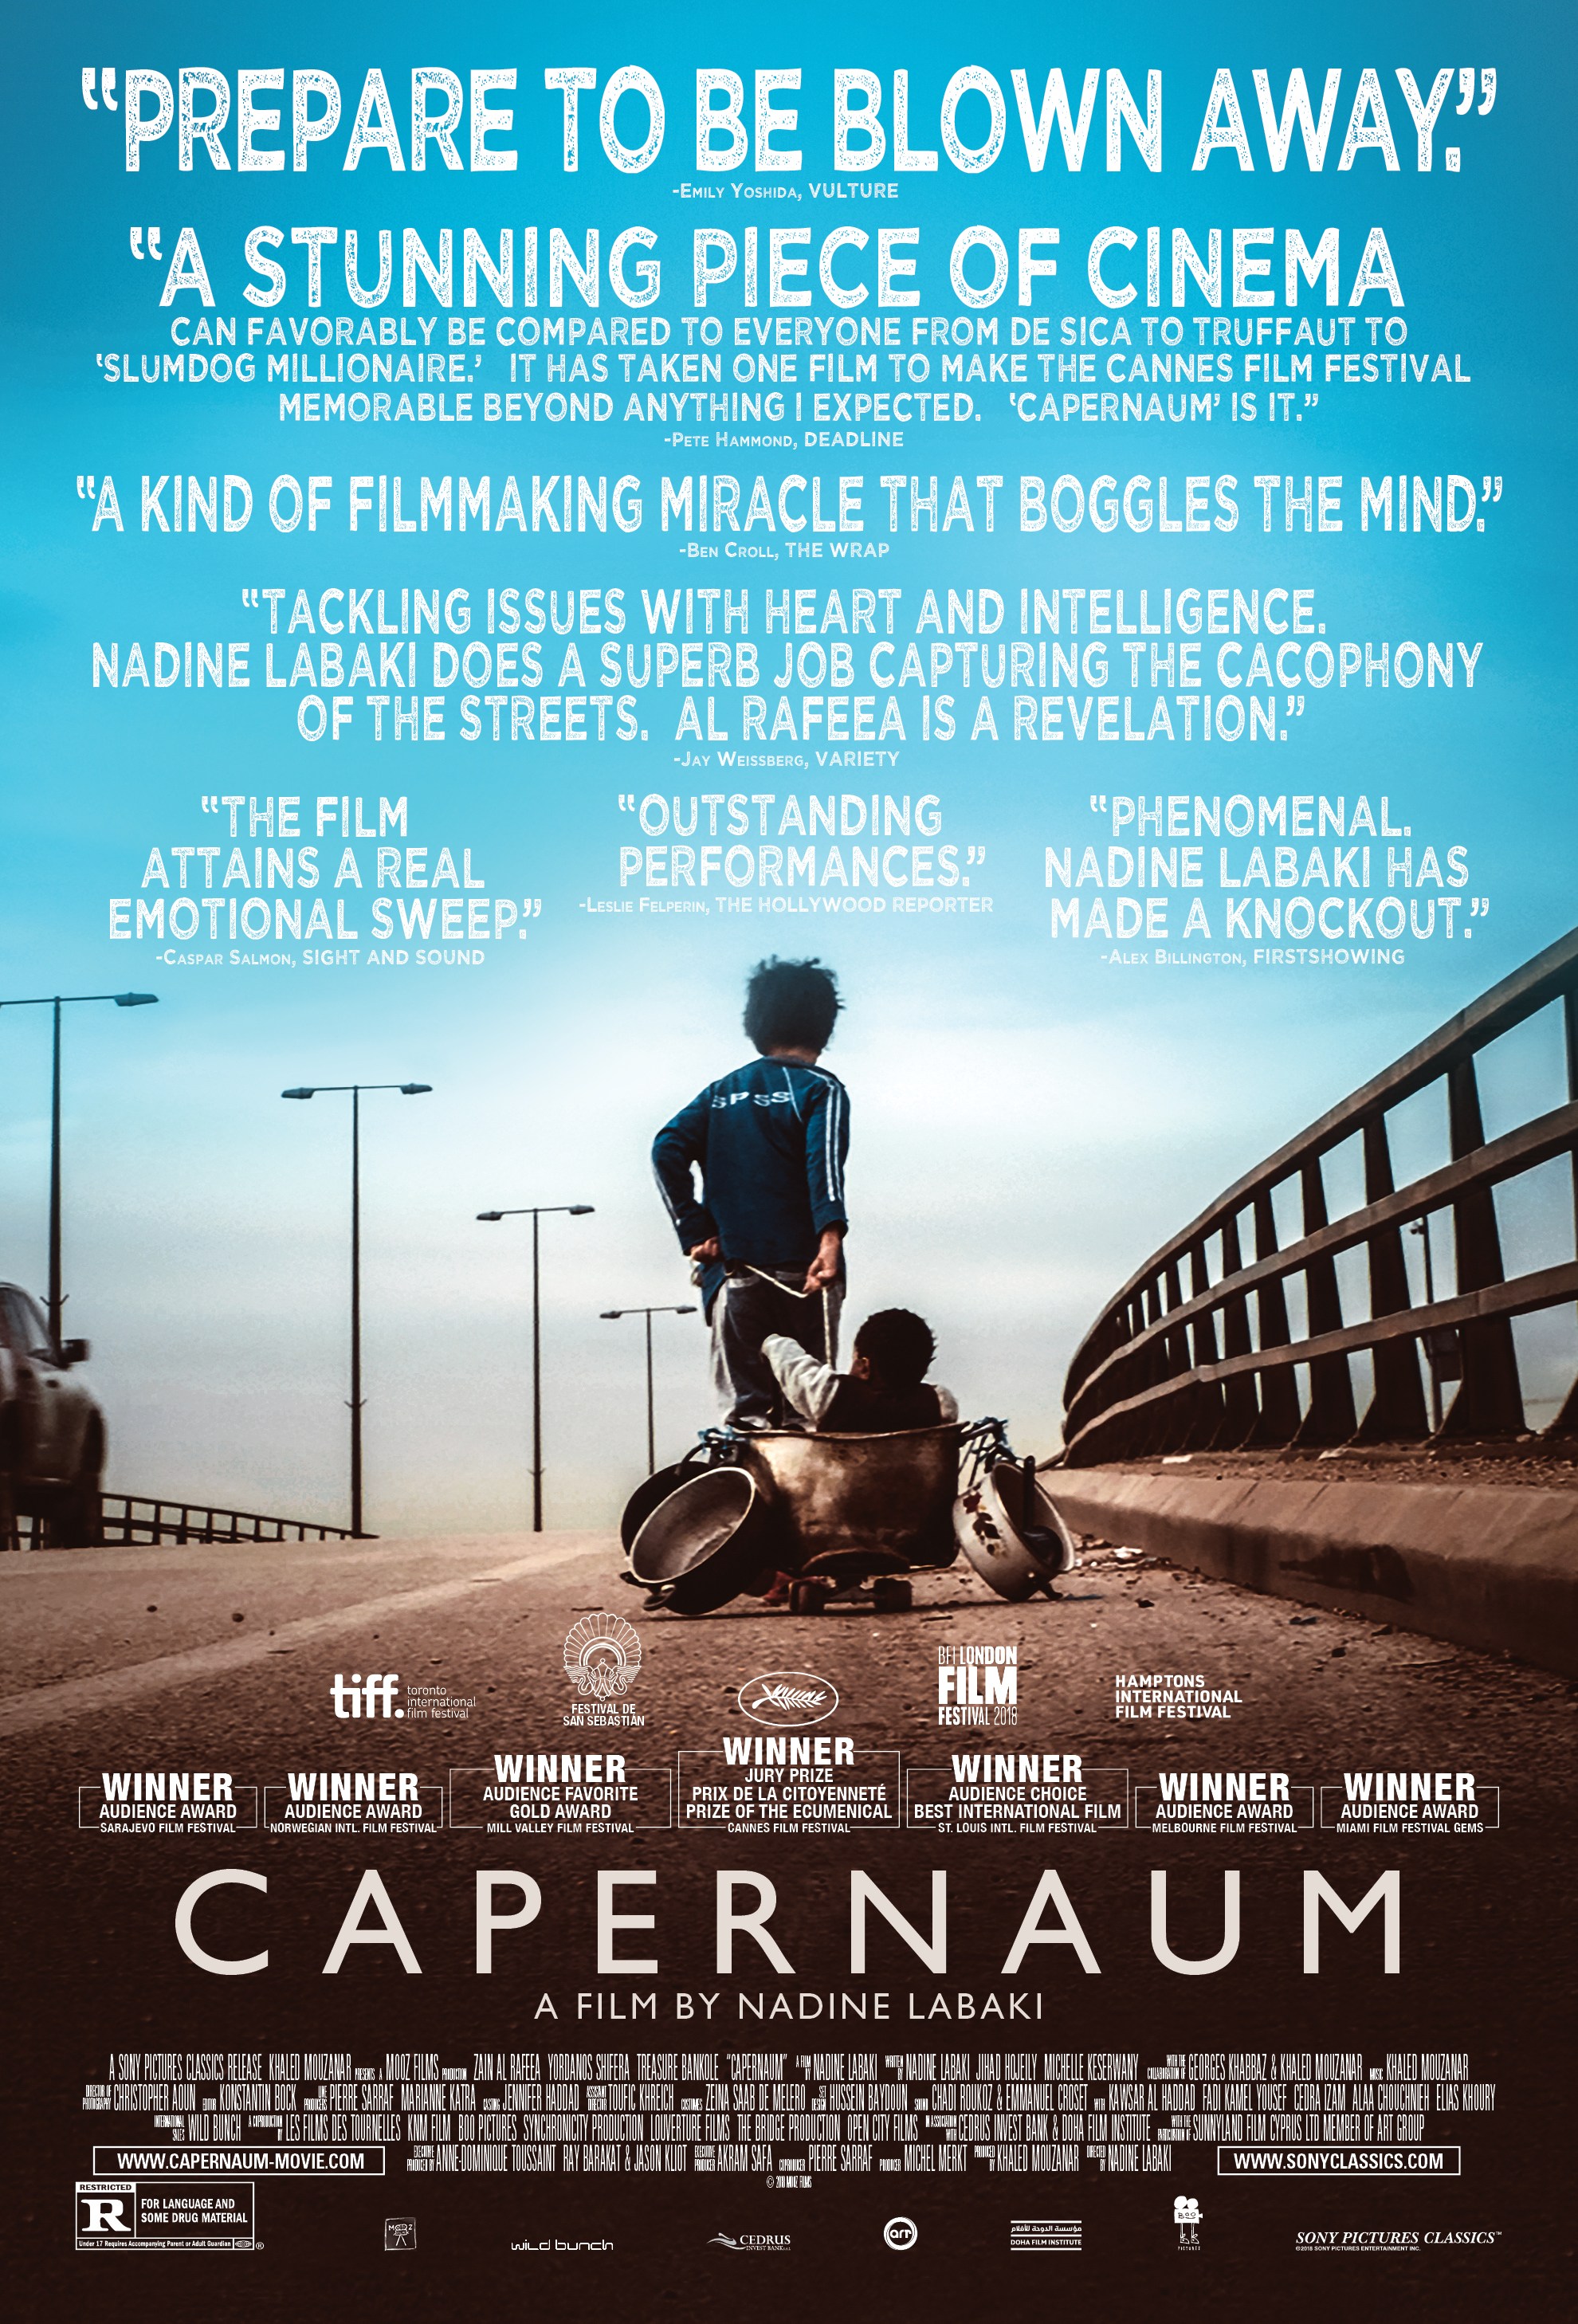 Nonton film Capernaum layarkaca21 indoxx1 ganool online streaming terbaru